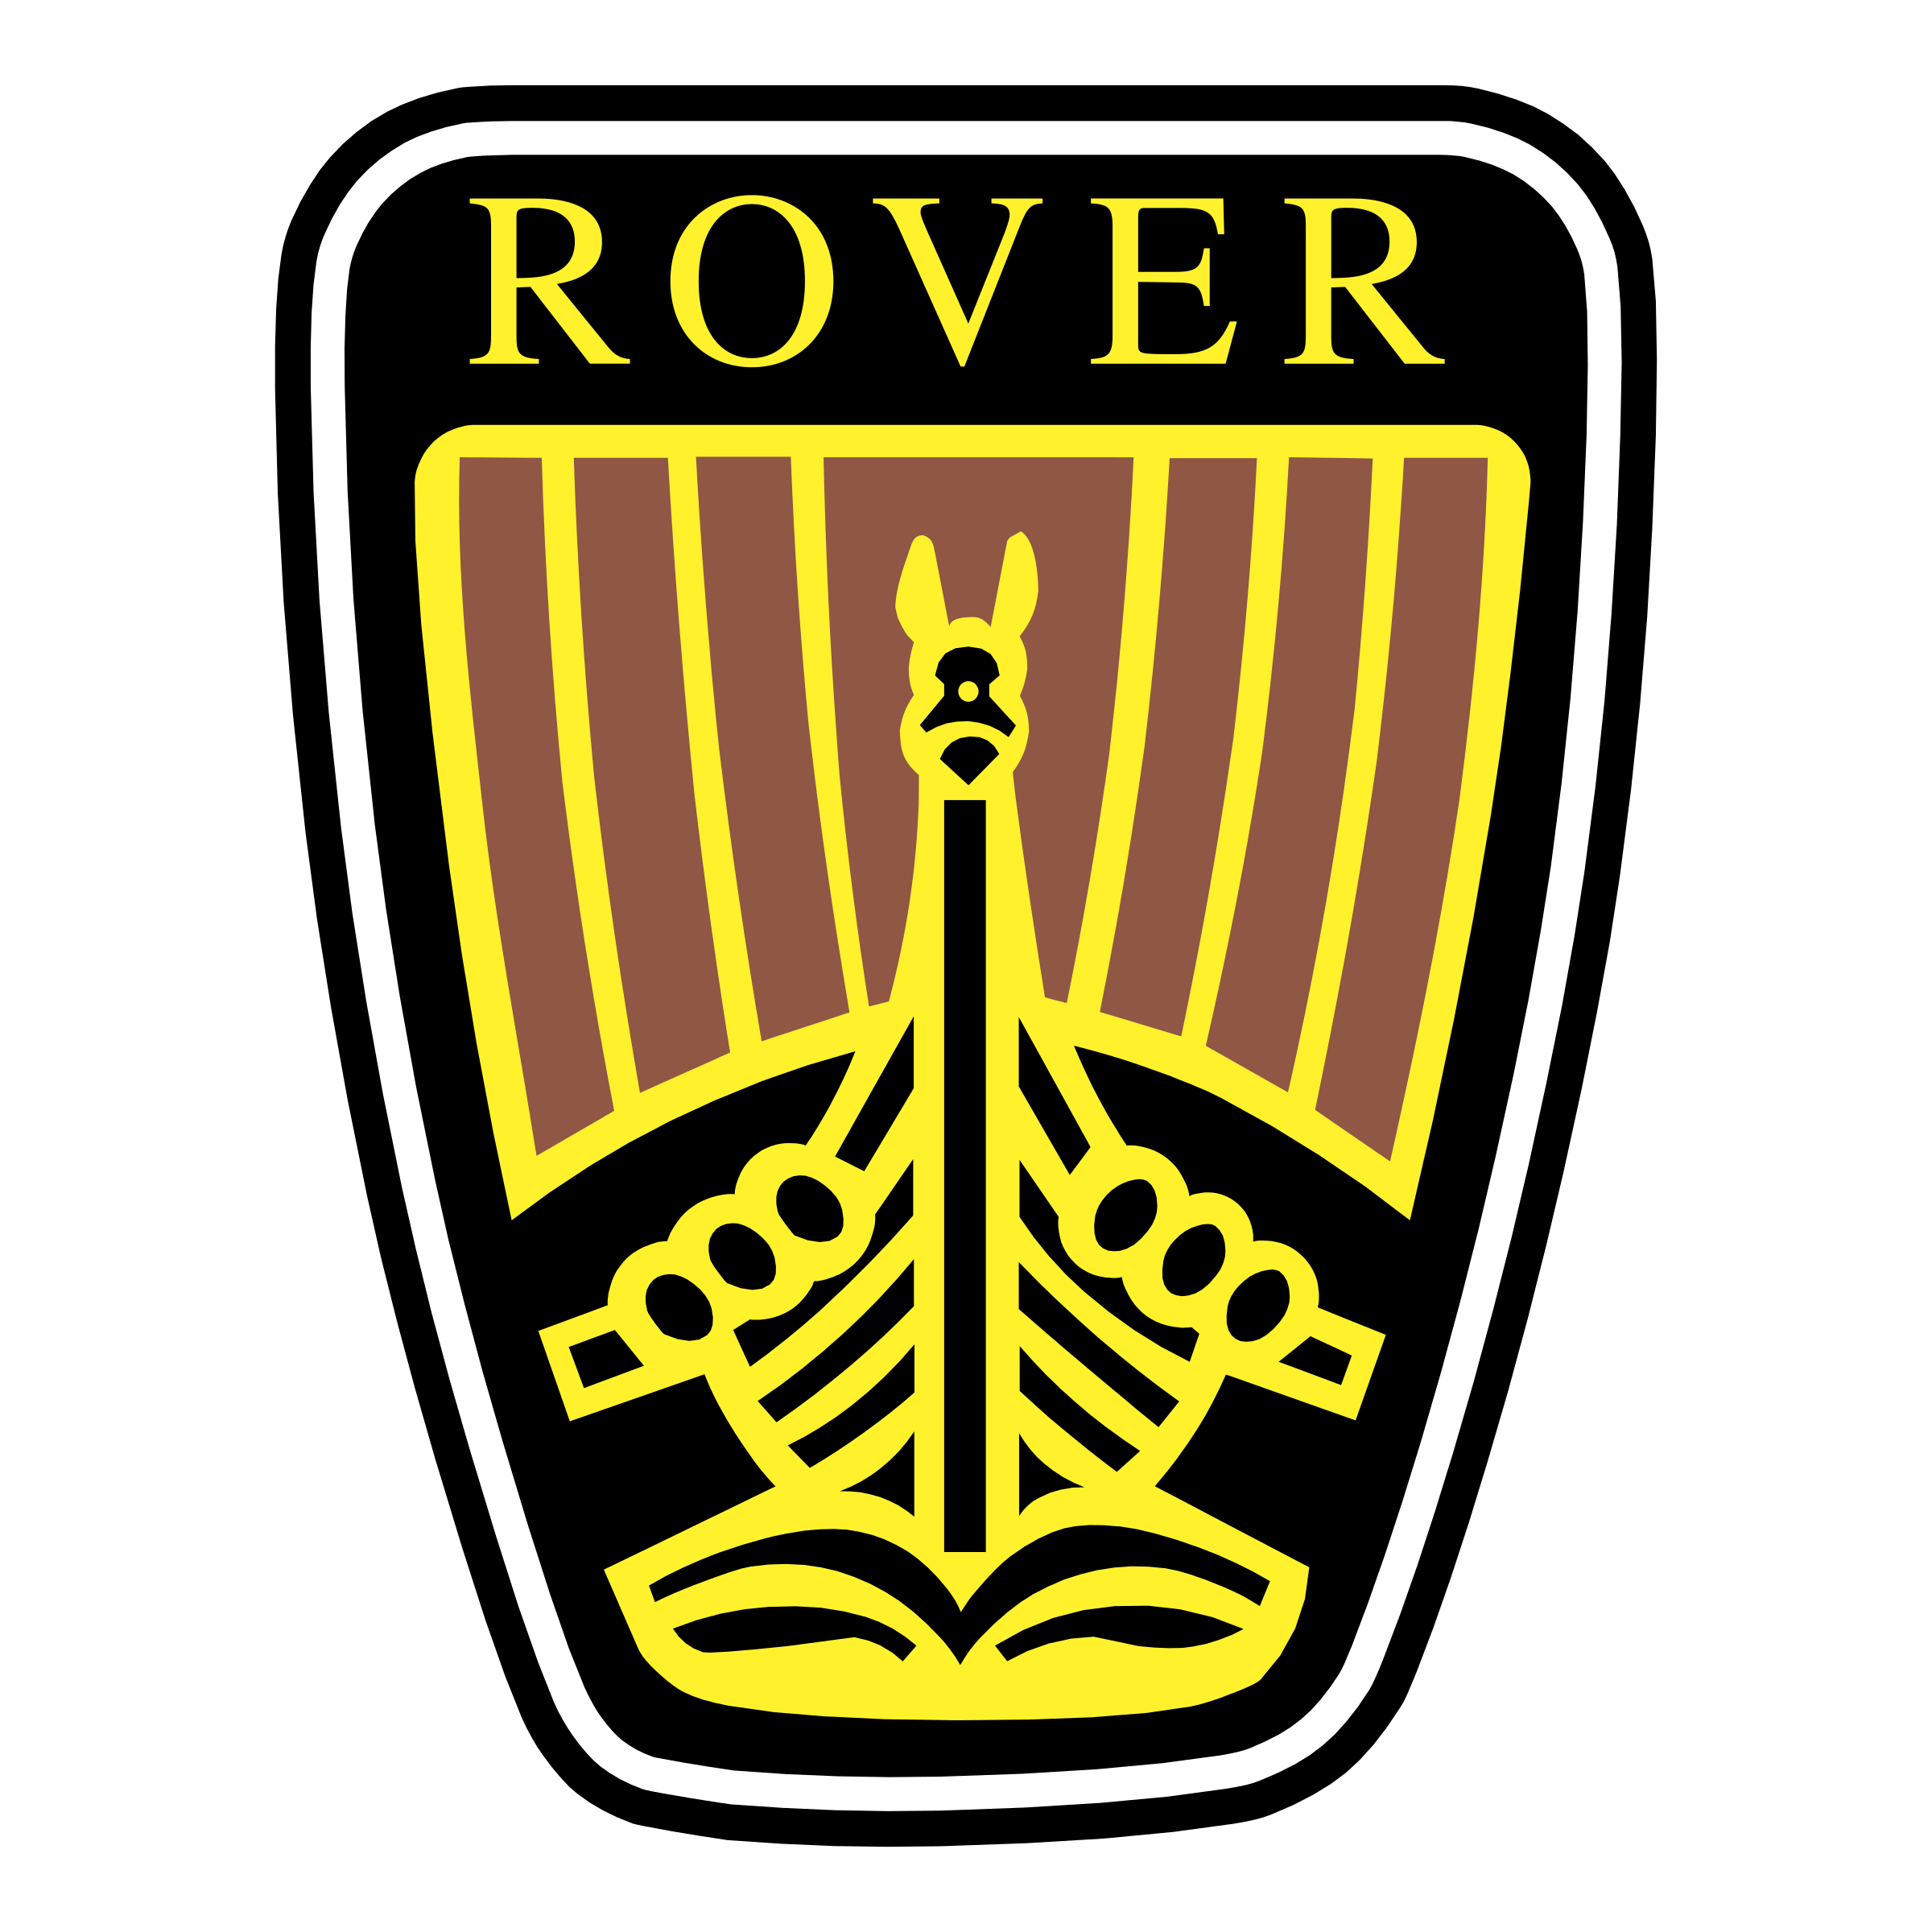 Rover Logo - Rover Logo PNG Transparent & SVG Vector - Freebie Supply